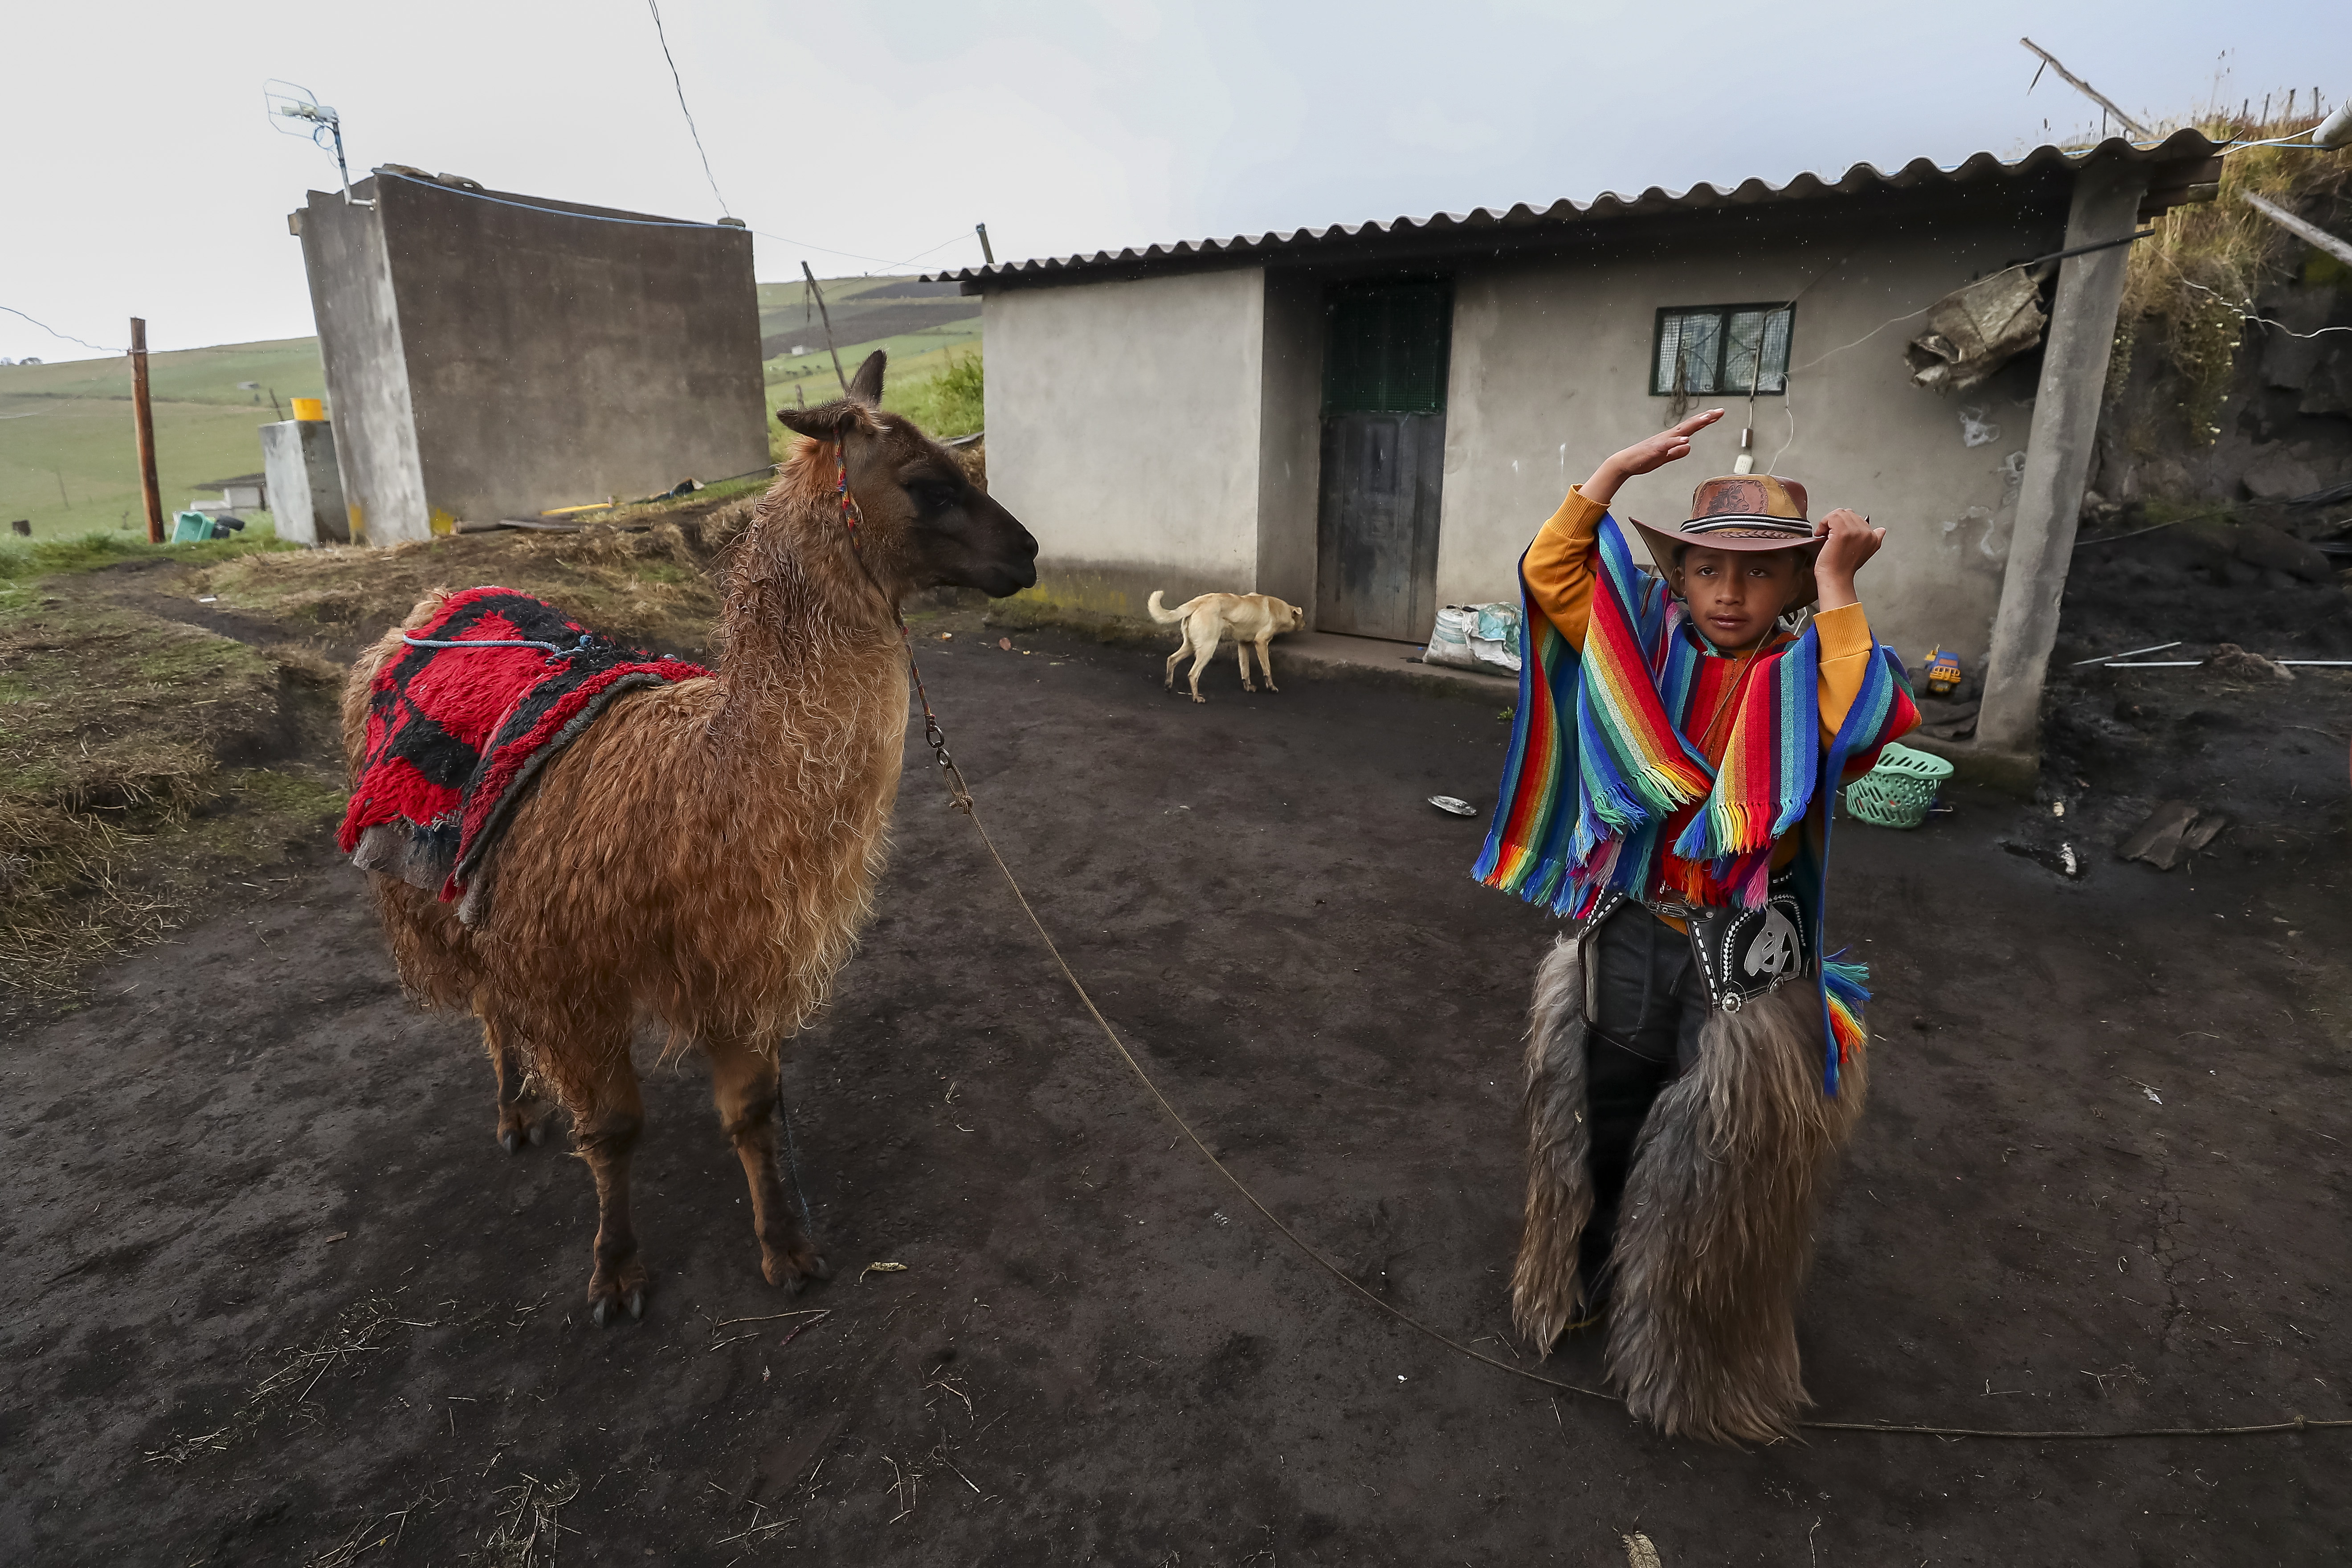 Les Races de Lama : Q'ara, Chaku, Llamingo, Suri, Ccara sullo, Wooly –  Super Lama